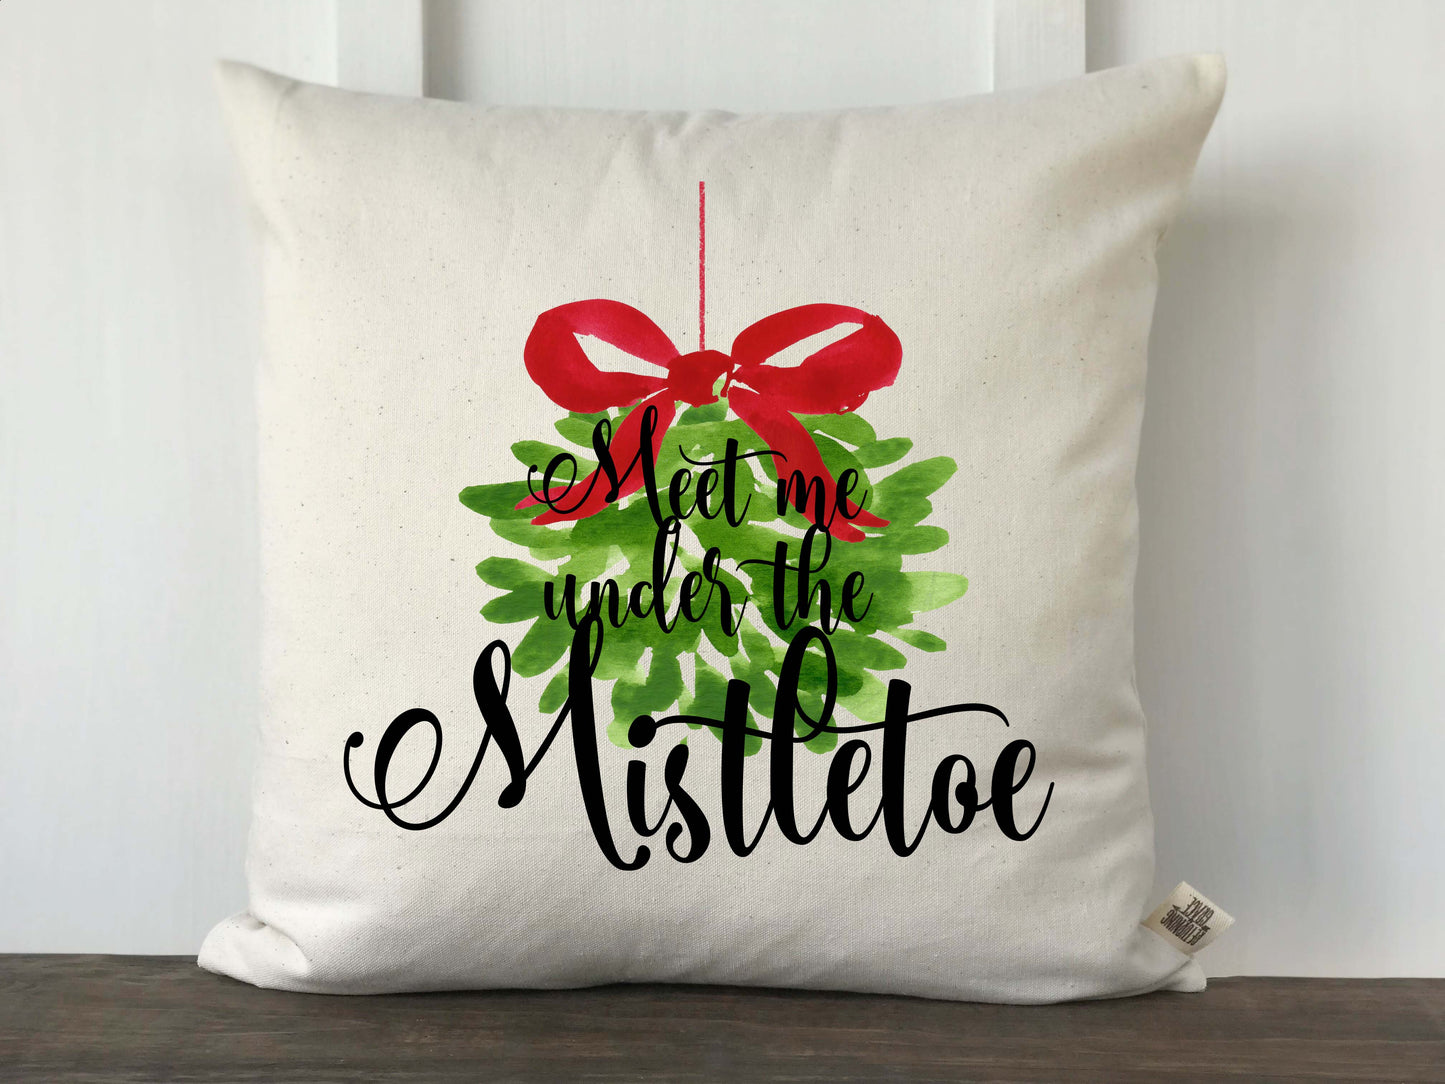 Meet Me Under The Mistletoe Christmas Pillow Cover - Returning Grace Designs